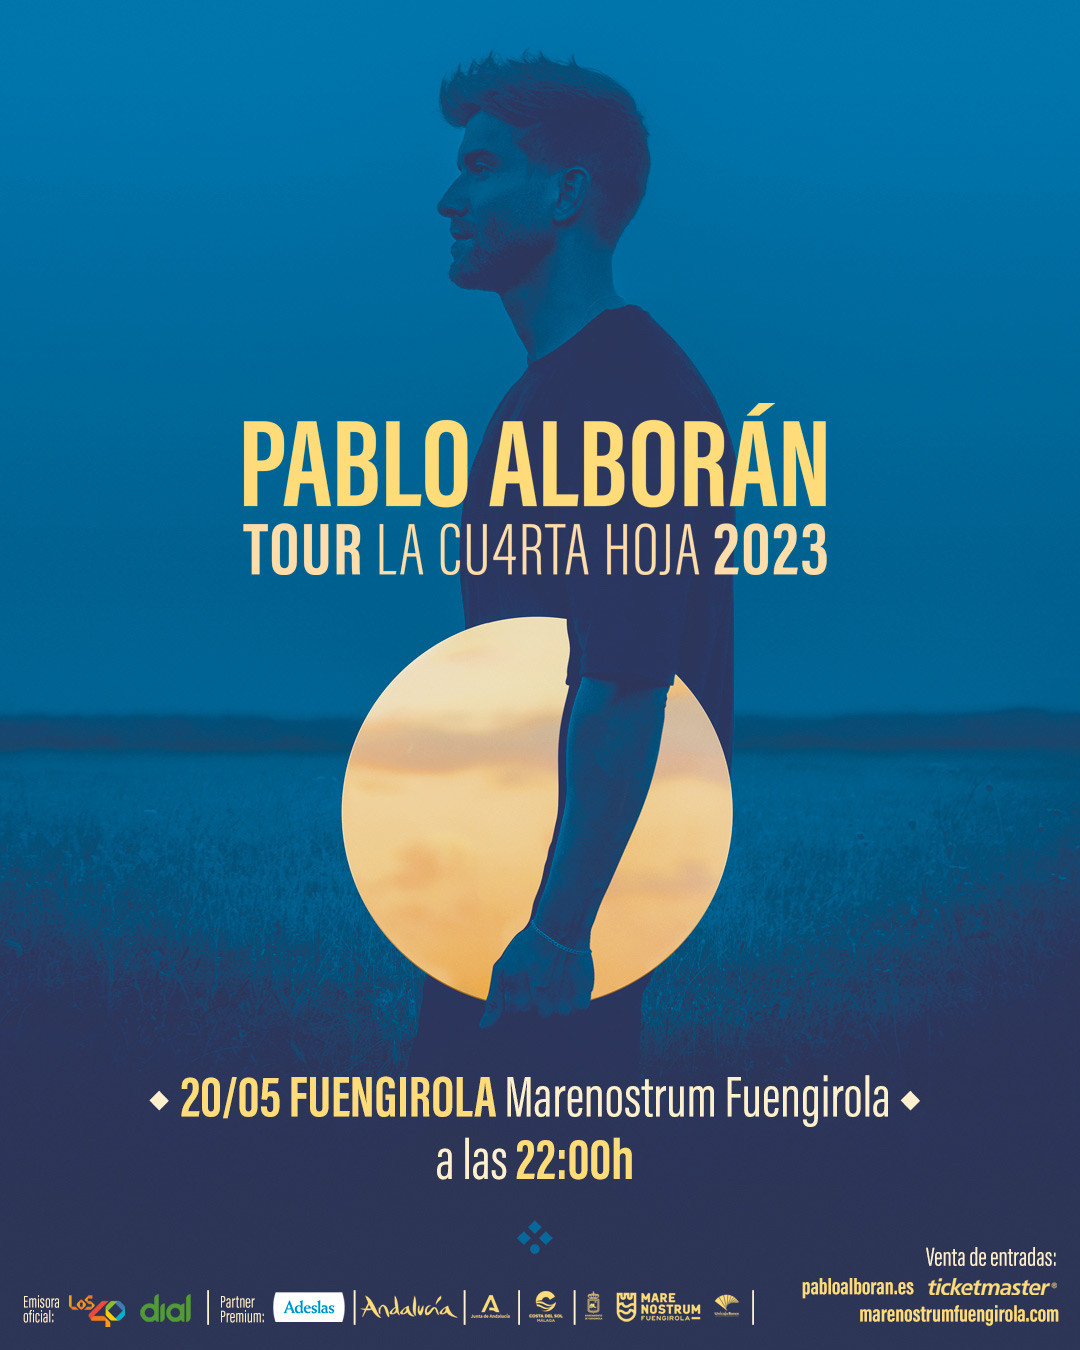 Pablo Alborán Tour La Cu4arta Hoja Web oficial de turismo de Andalucía